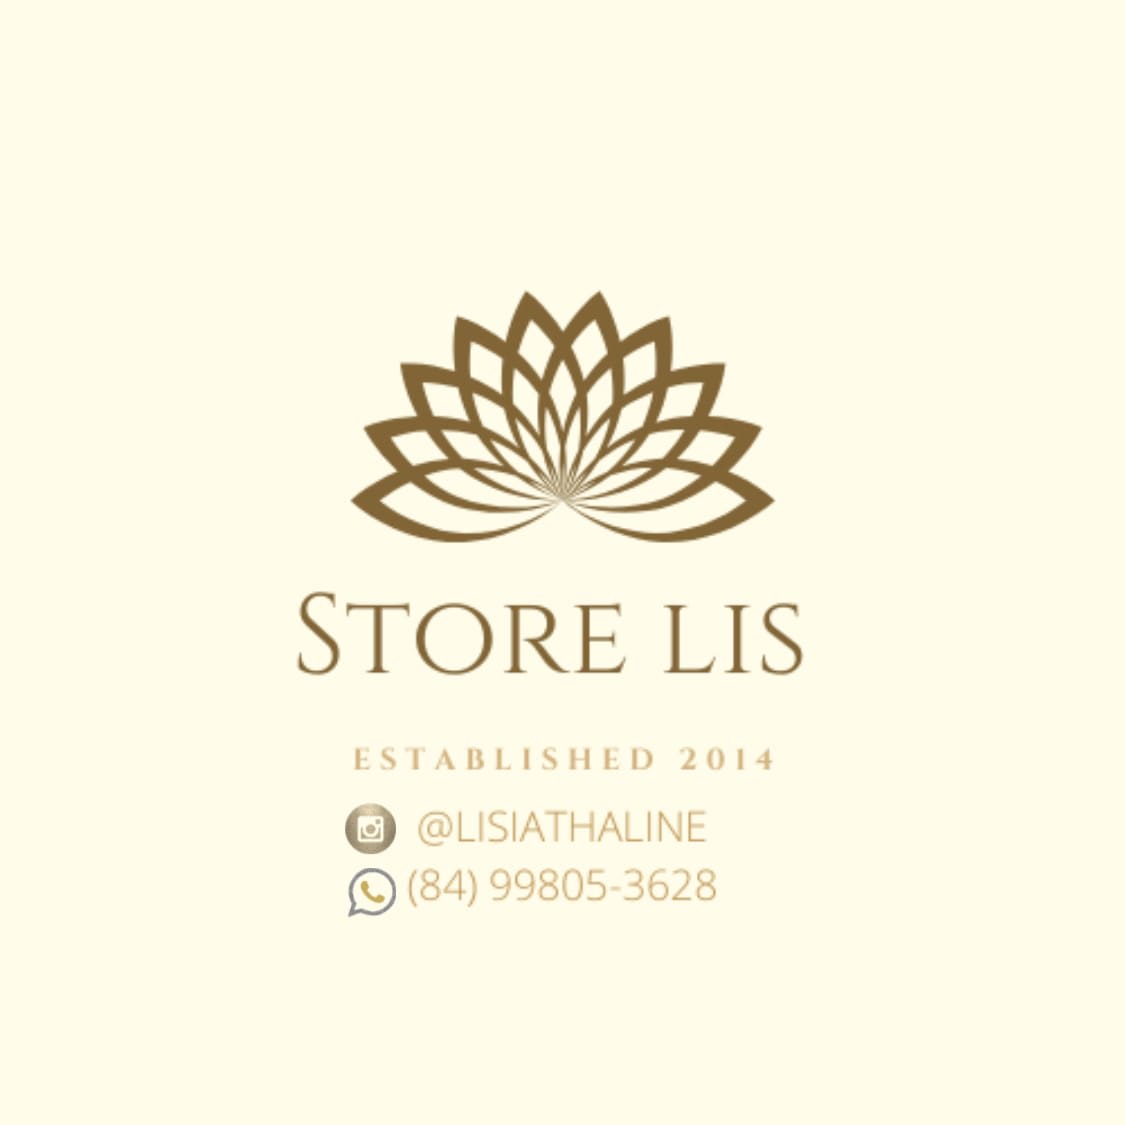 Store Lis